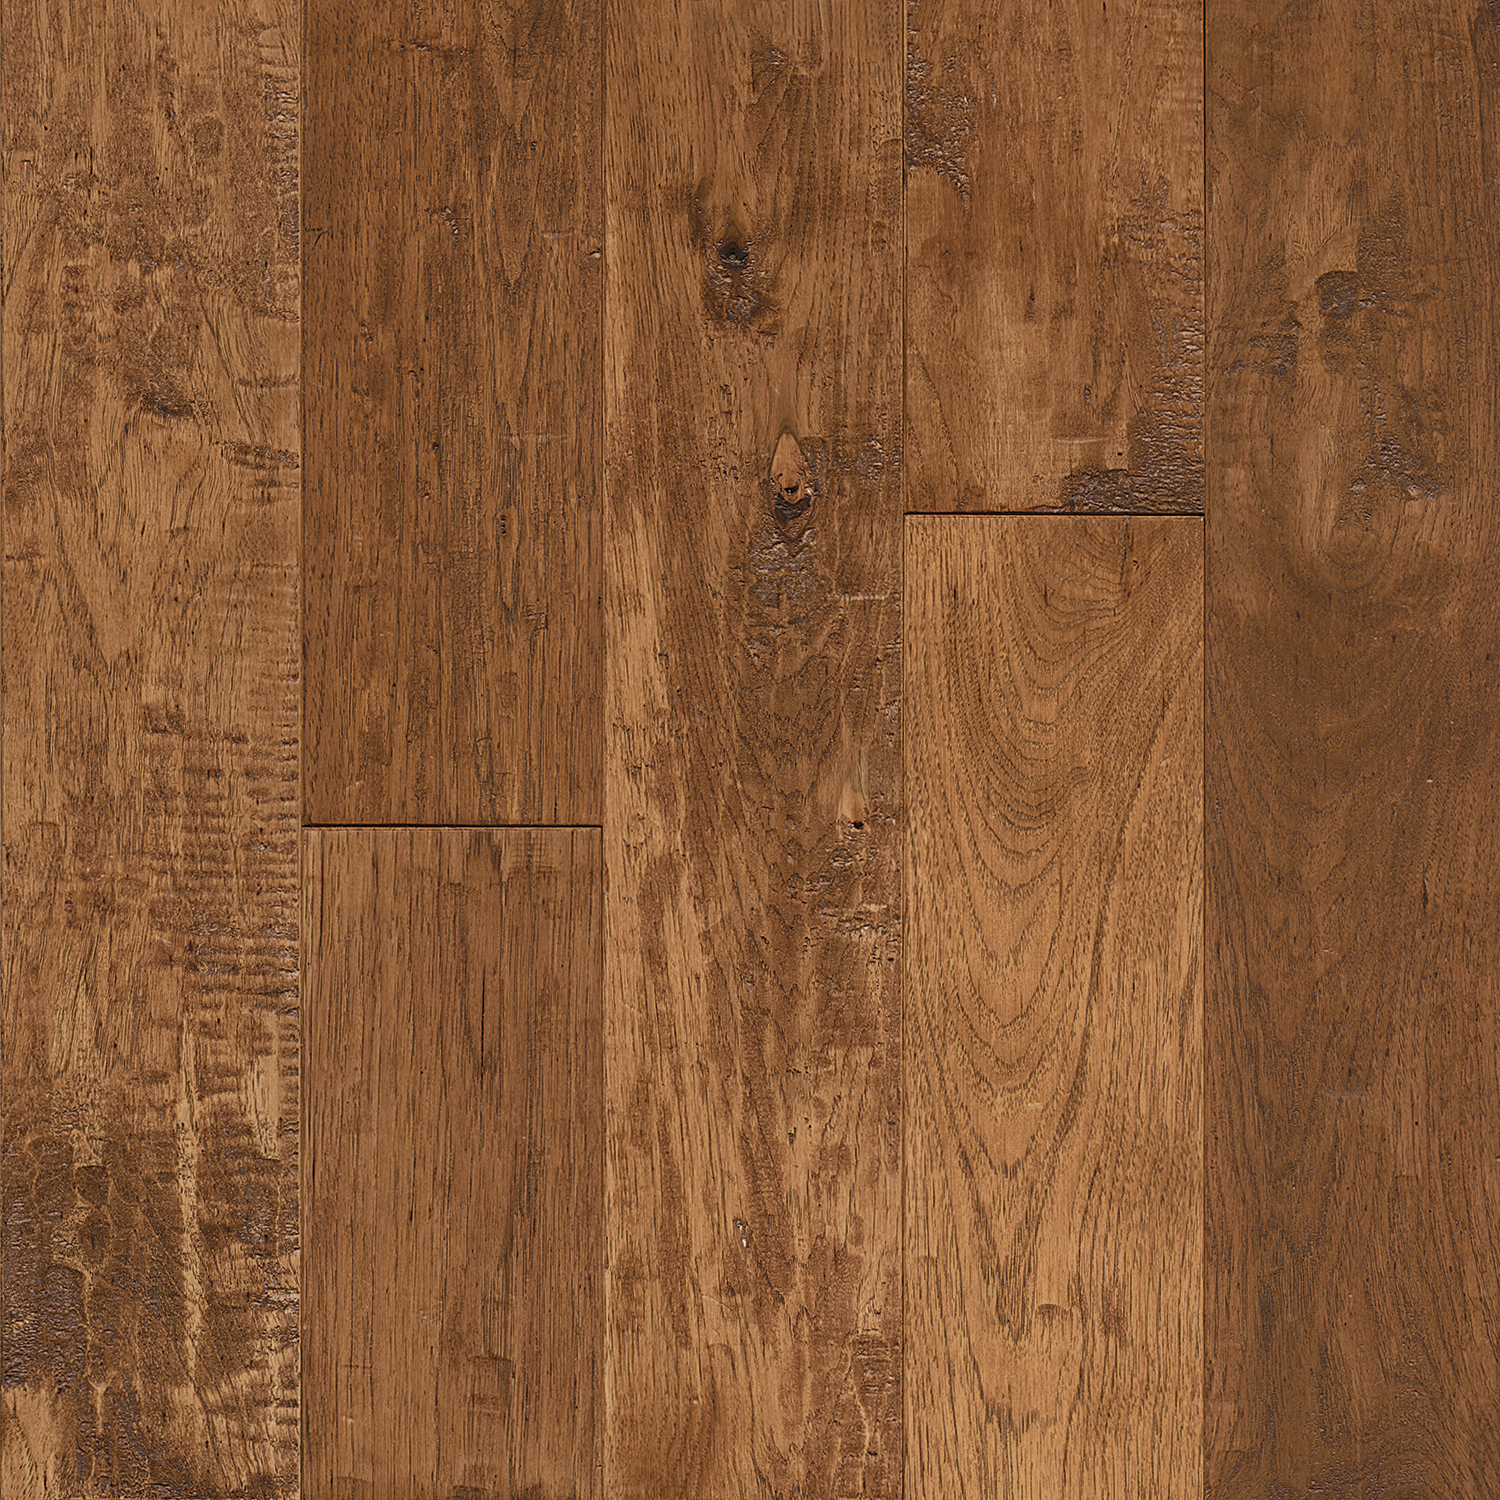 Hickory Solid Hardwood Sas507, Dave’s Hardwood Flooring